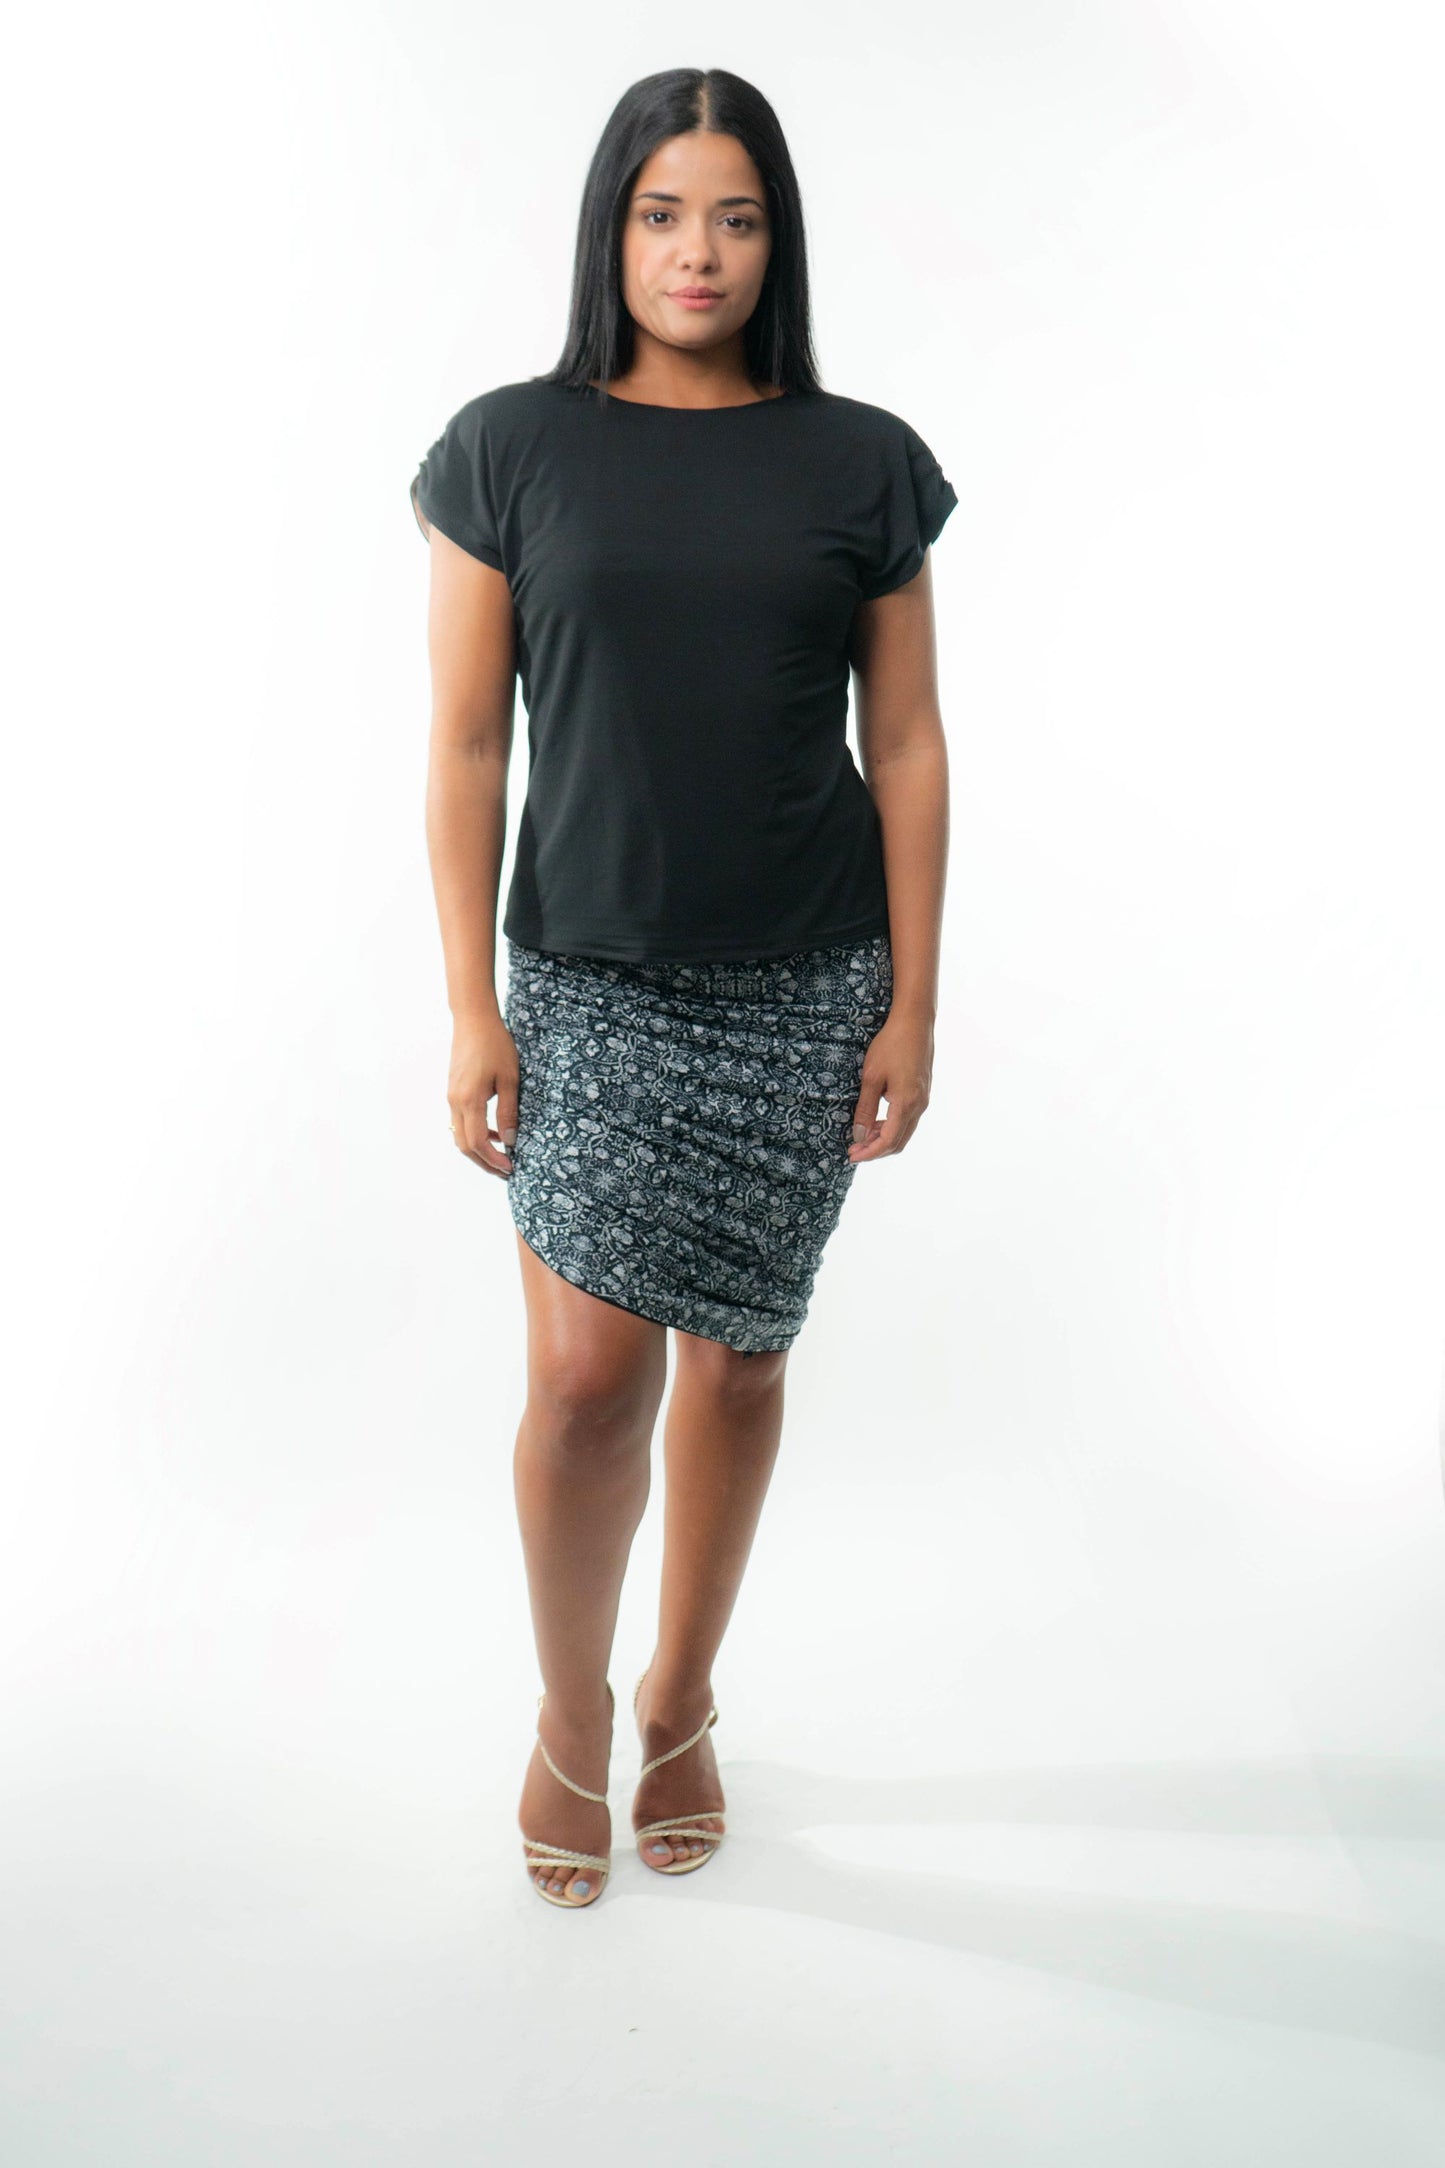 VALENCIA Skirt 8 in 1. Black/B&W Print